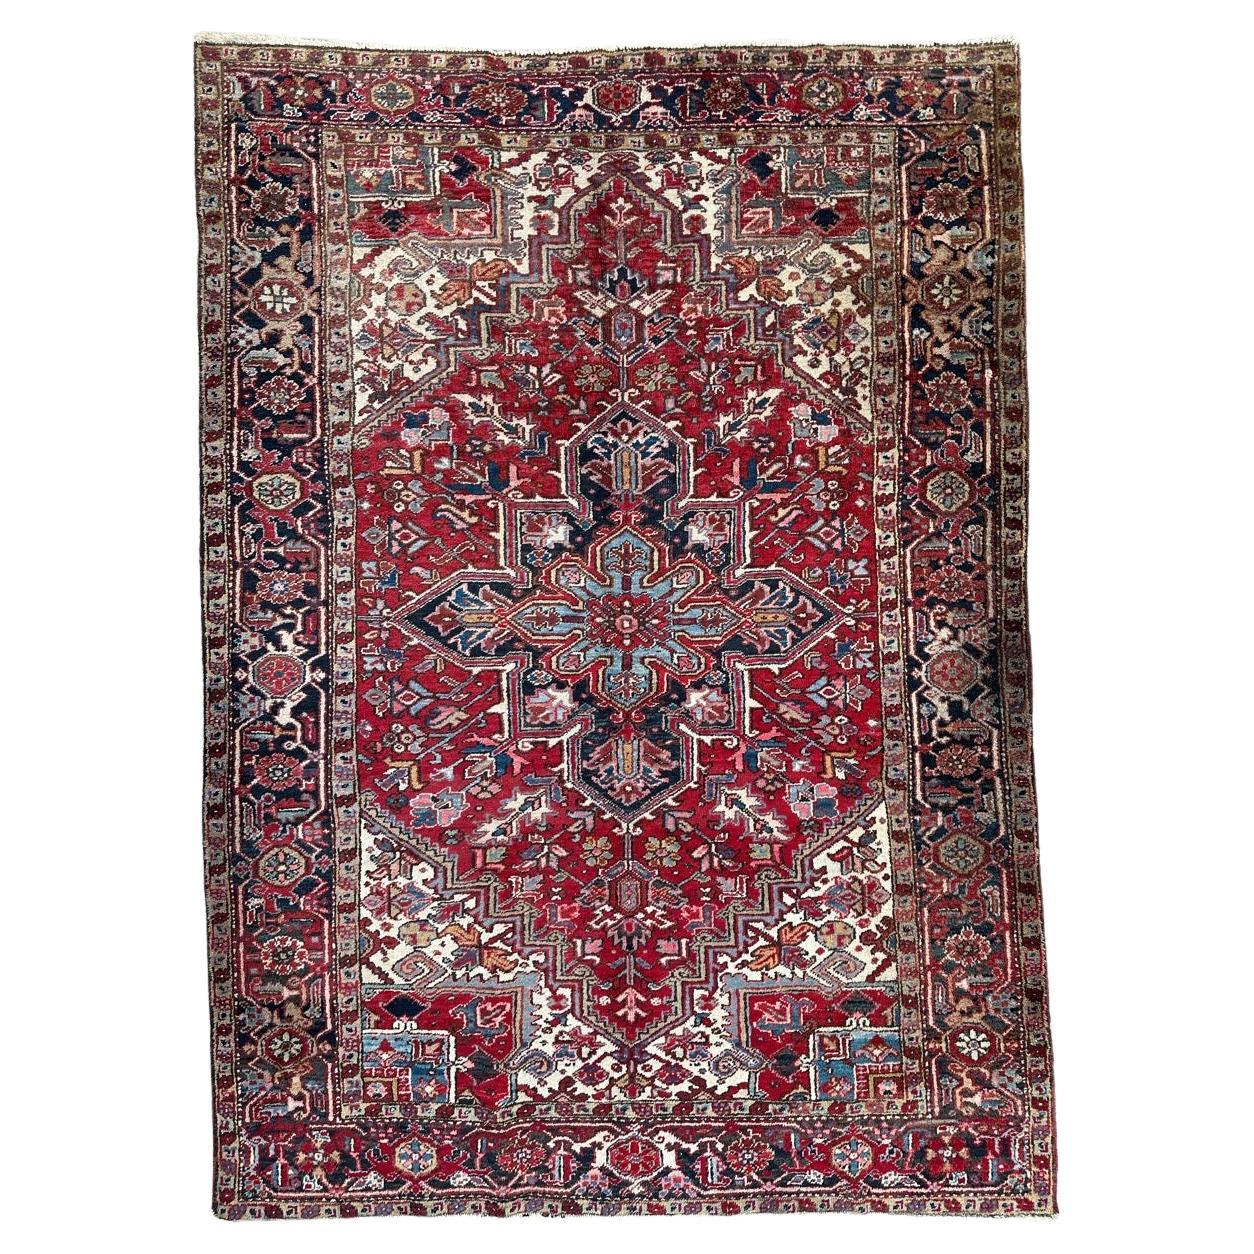 Bobyrug’s nice antique Heriz rug  For Sale